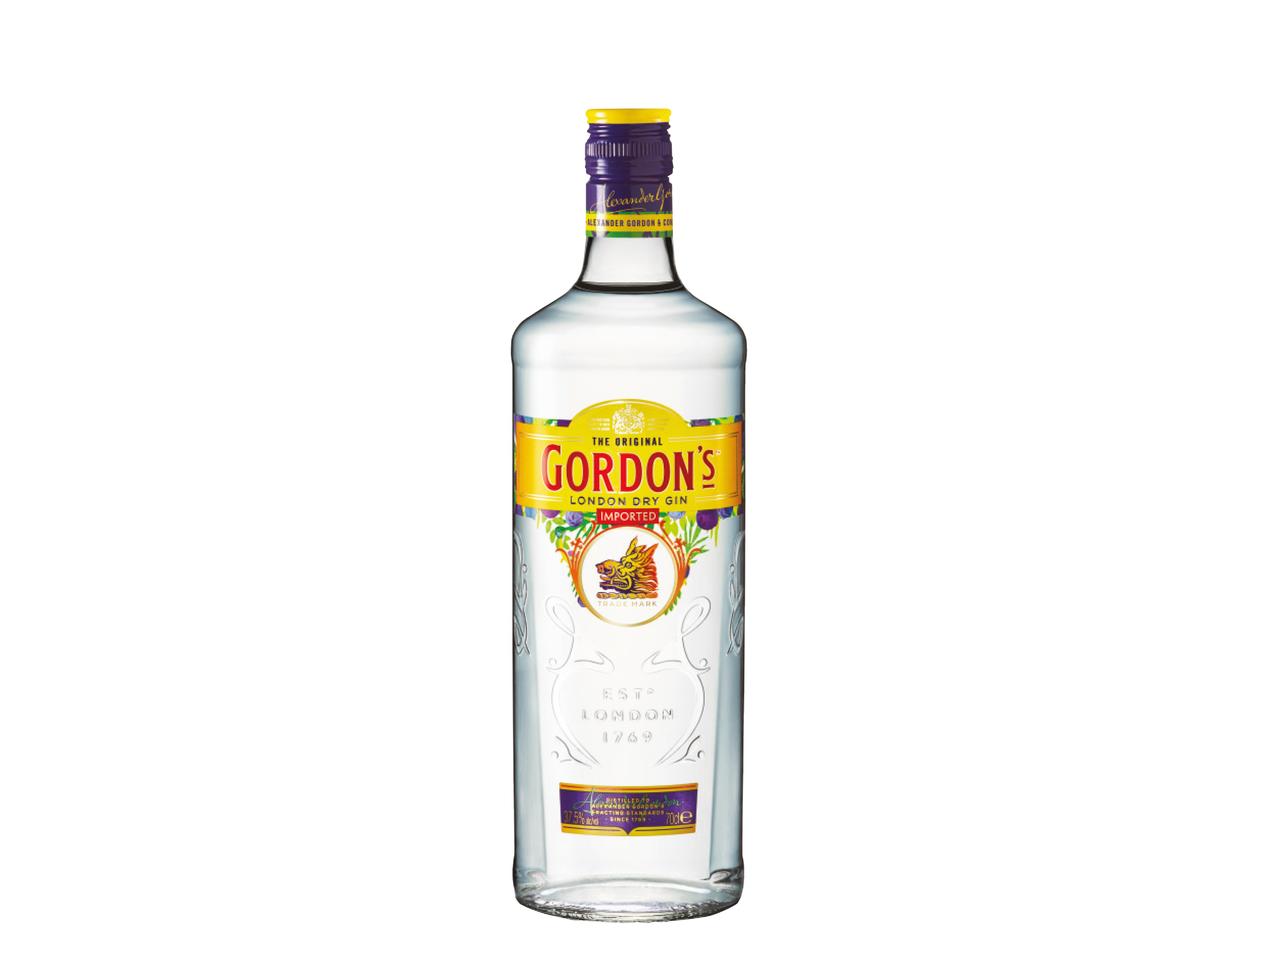 GORDONS(R) Dry Gin